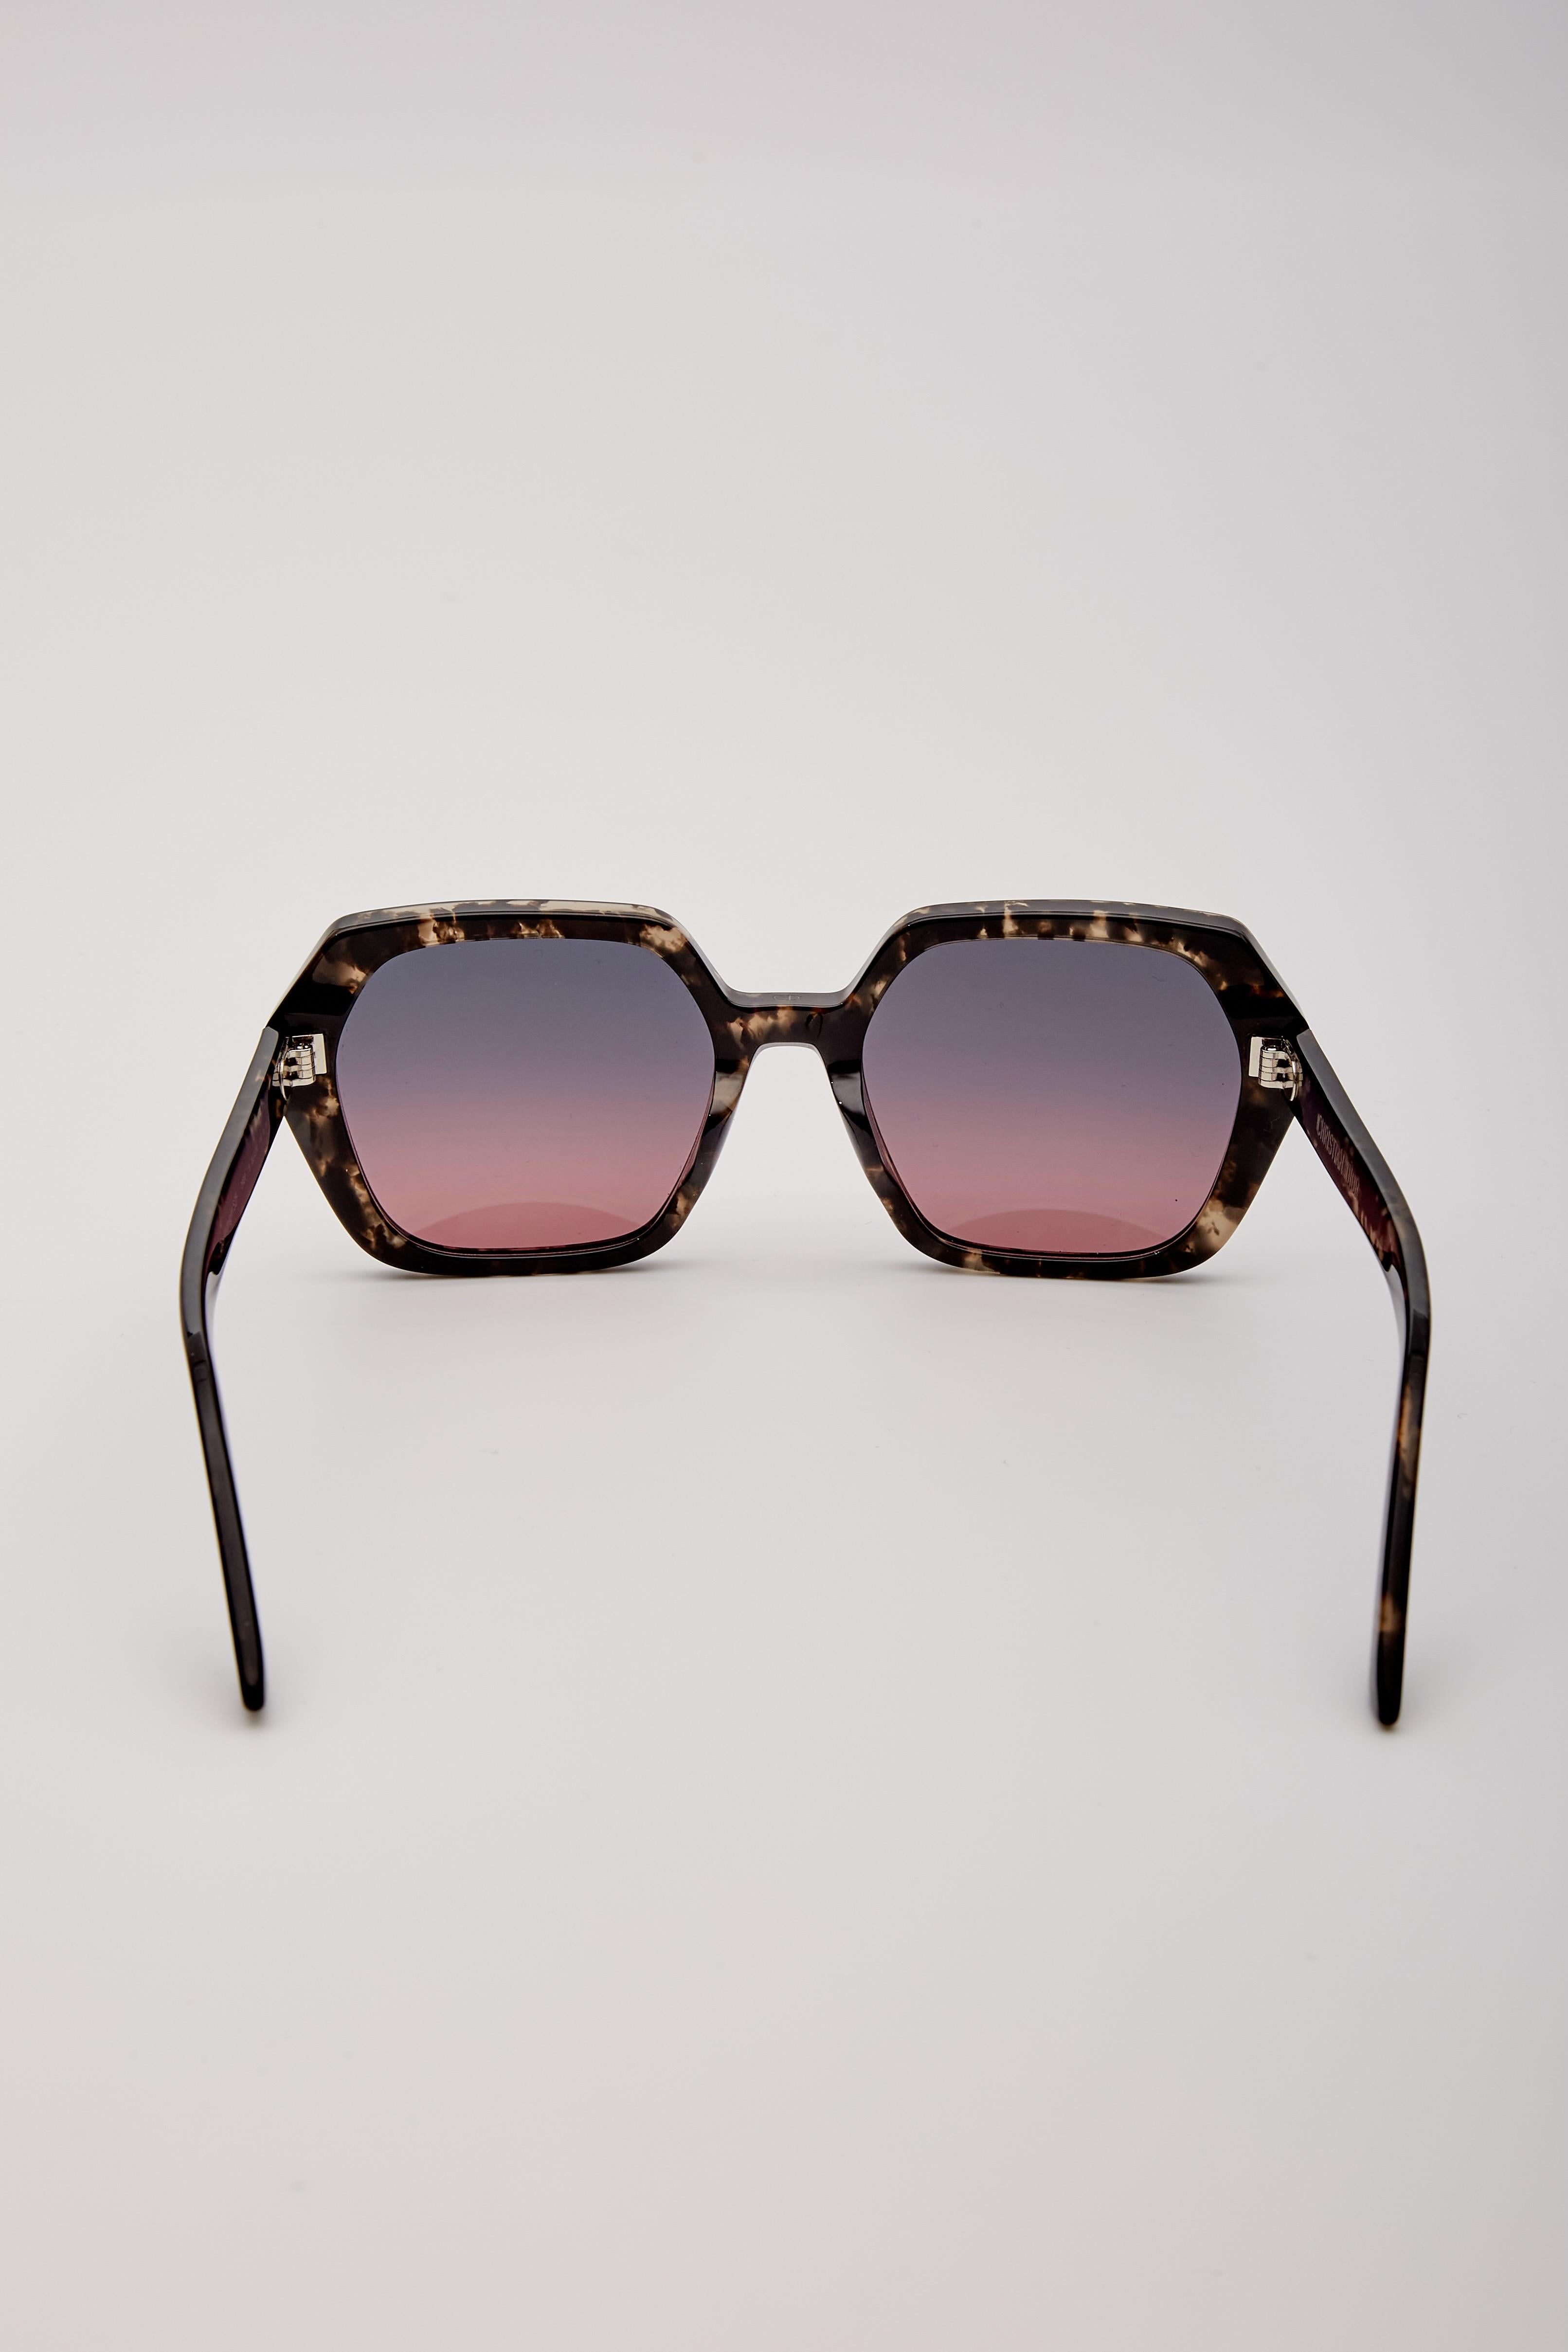 Dior Diormidnight Grey Smoke Gradient Effect Sunglasses For Sale 3